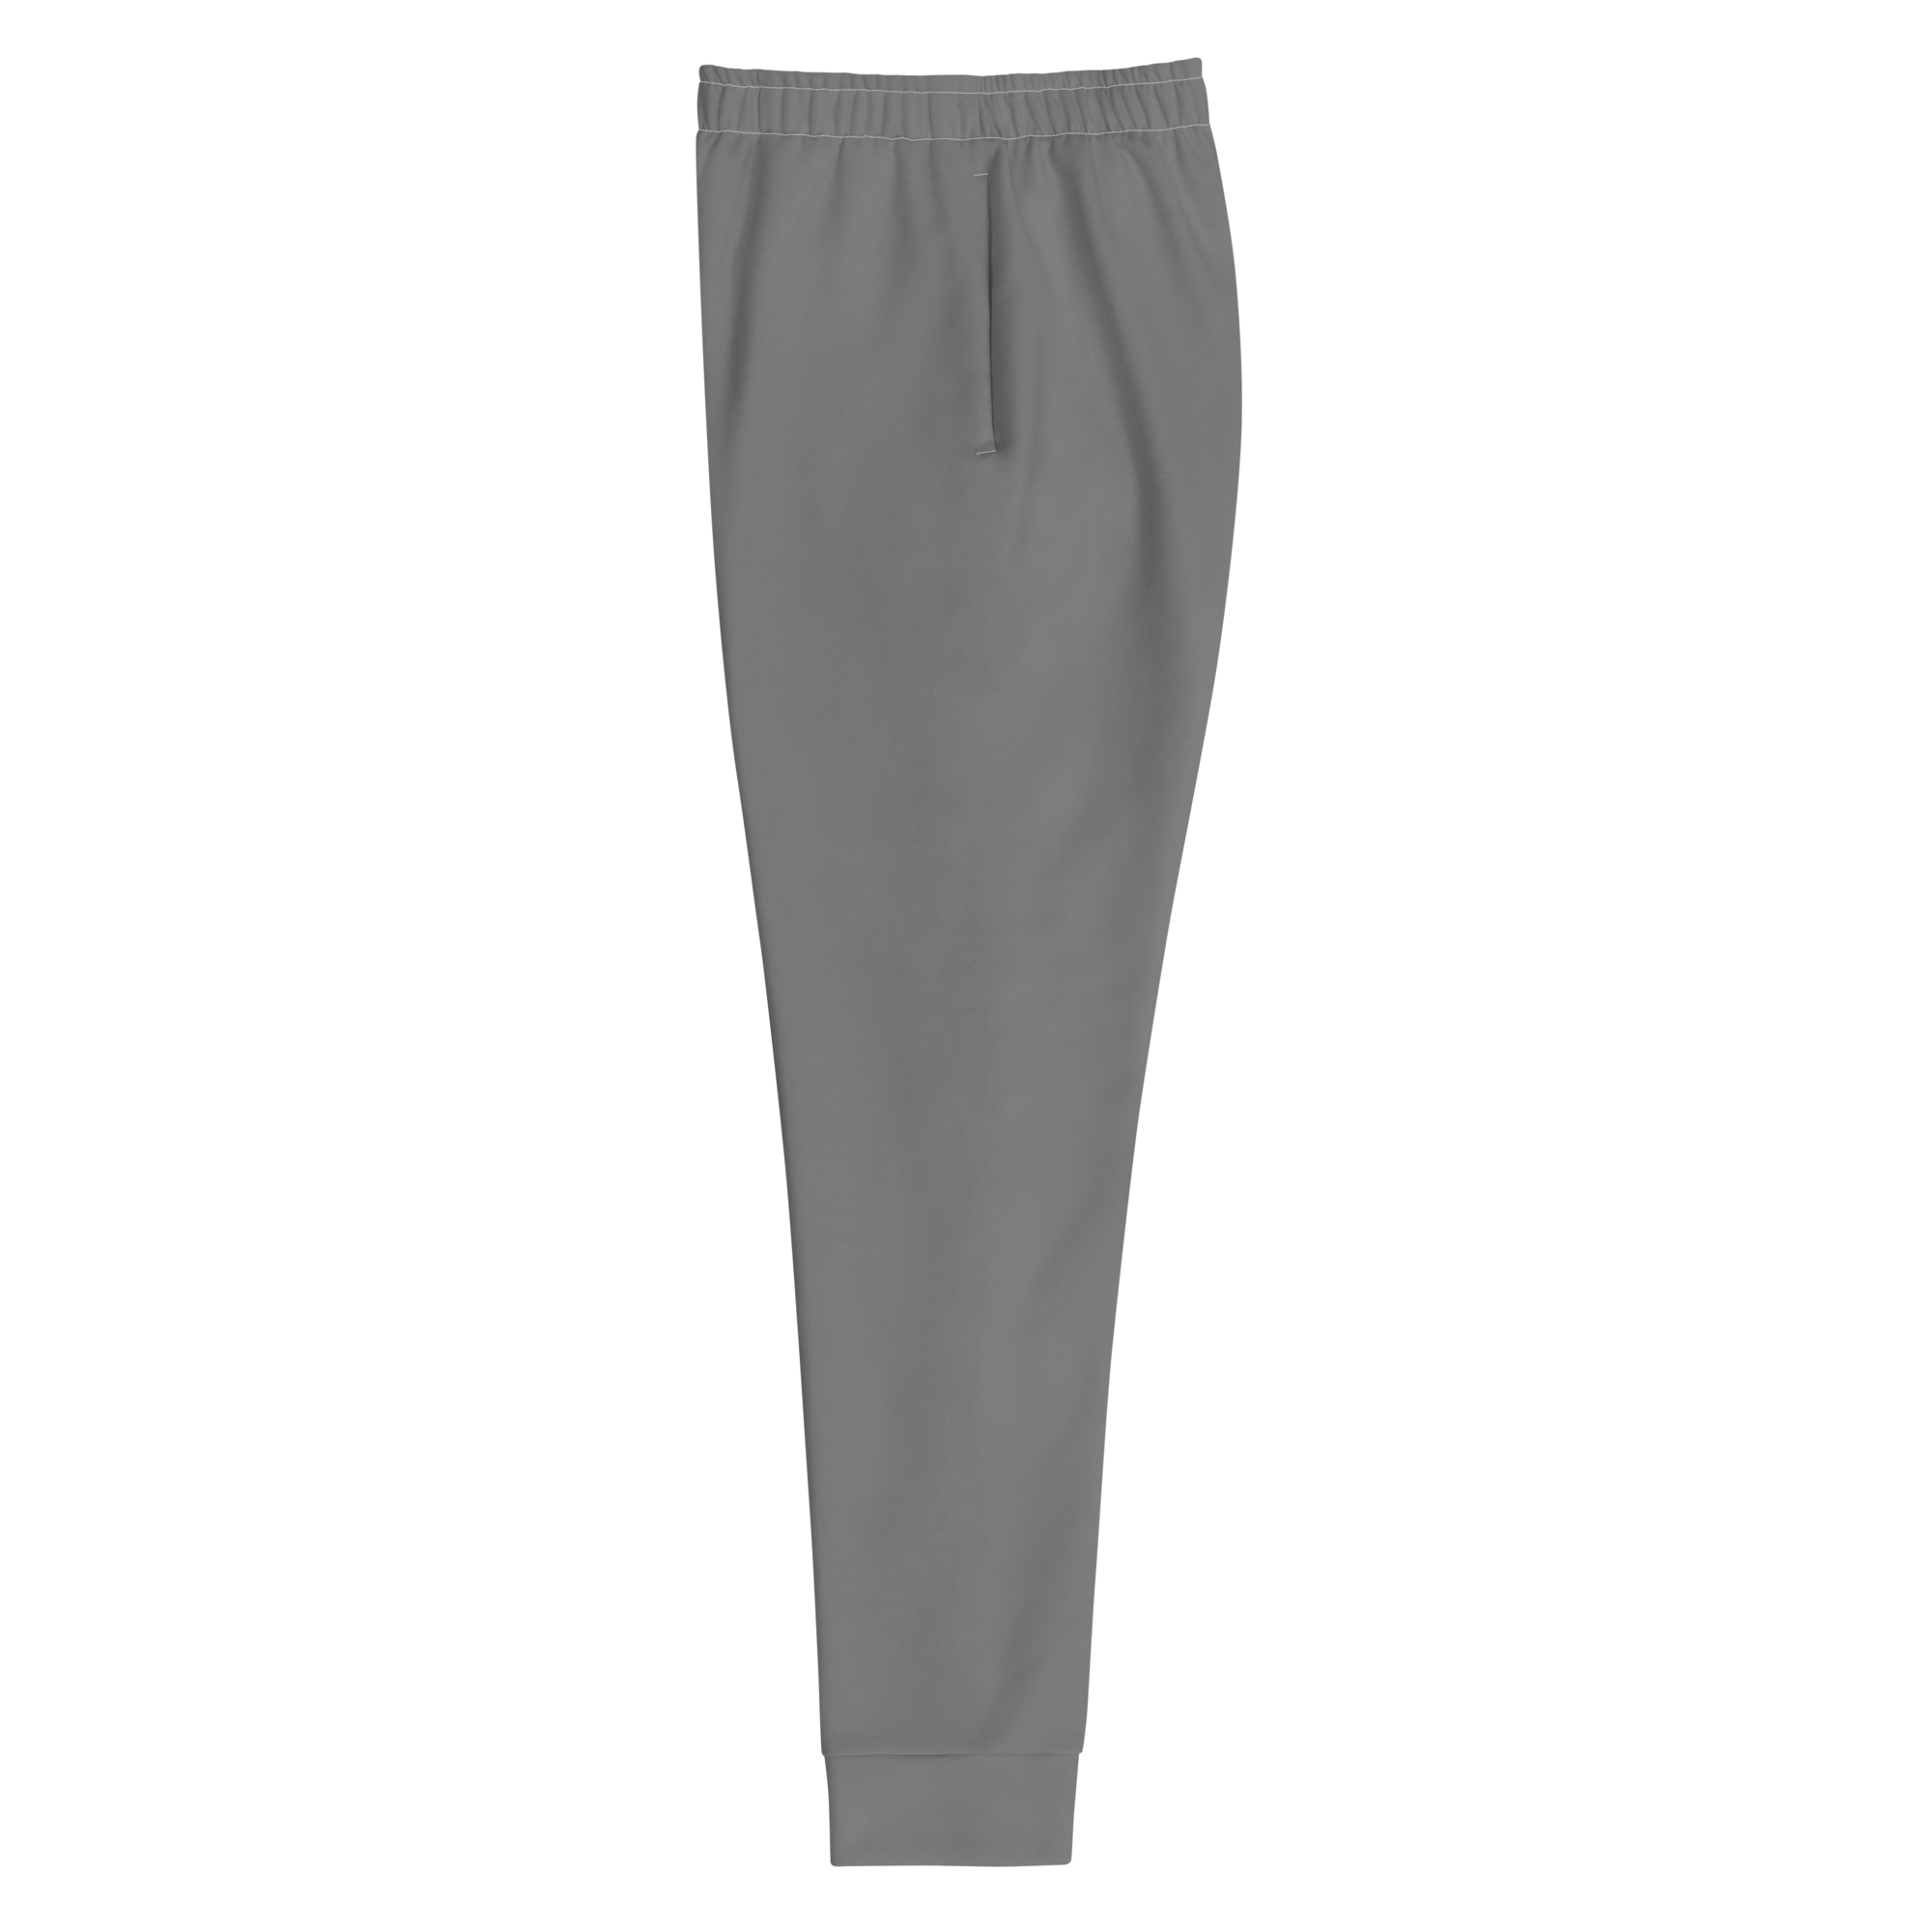 maillot.co | Two-Toned Jogger Sweatpants - Dark Grey/Light Grey left leg